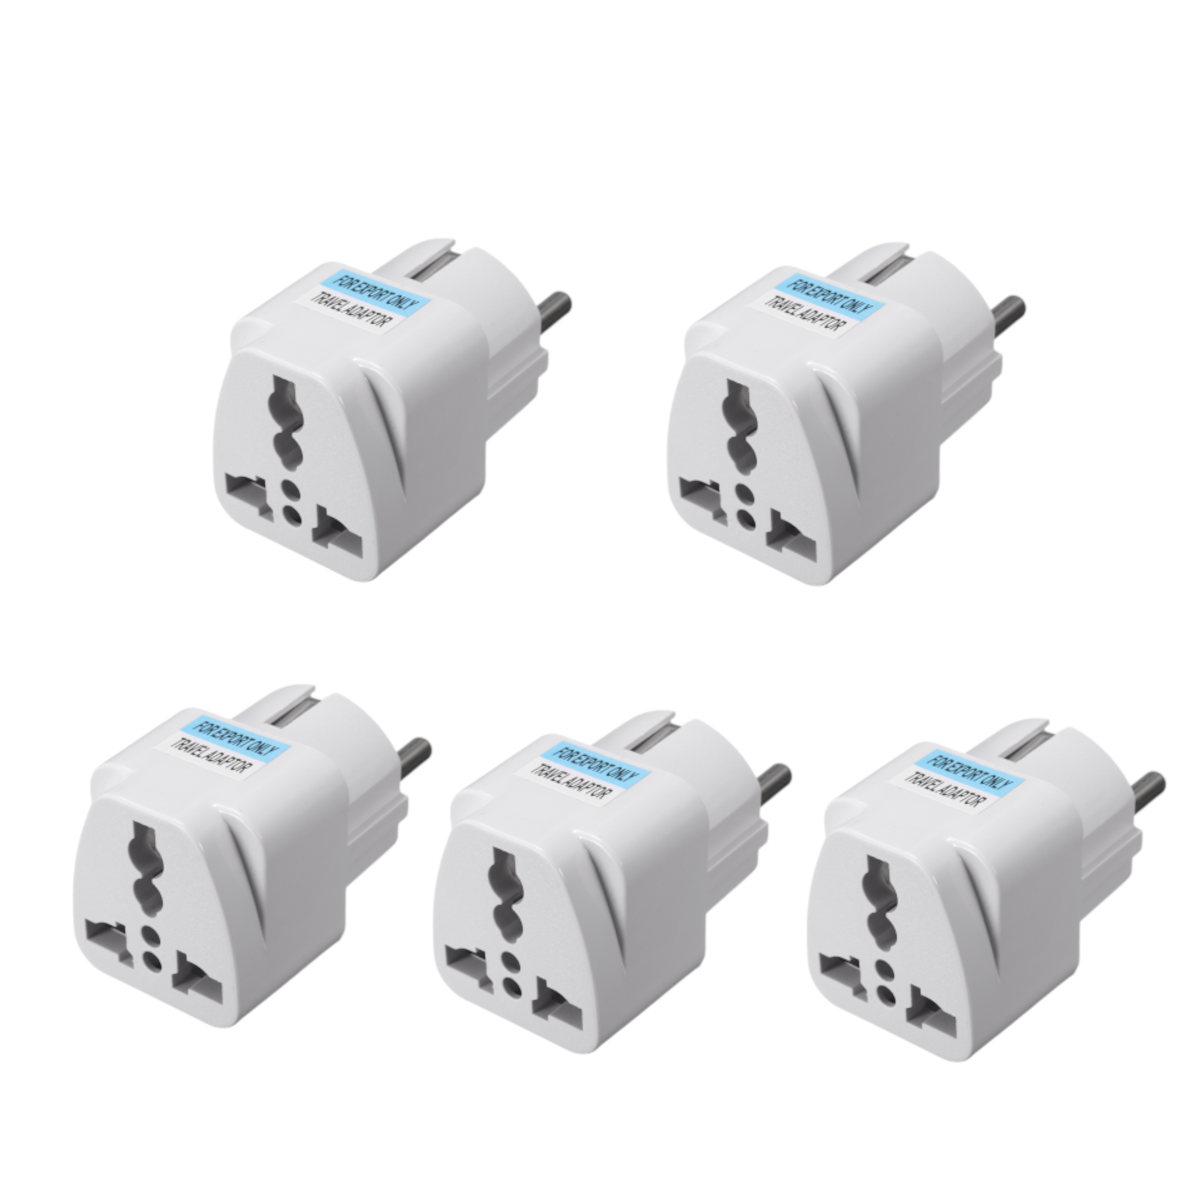 5pcs travel universal power outlet adapter uk us eu au to eu plug conversion plug socket converter connector